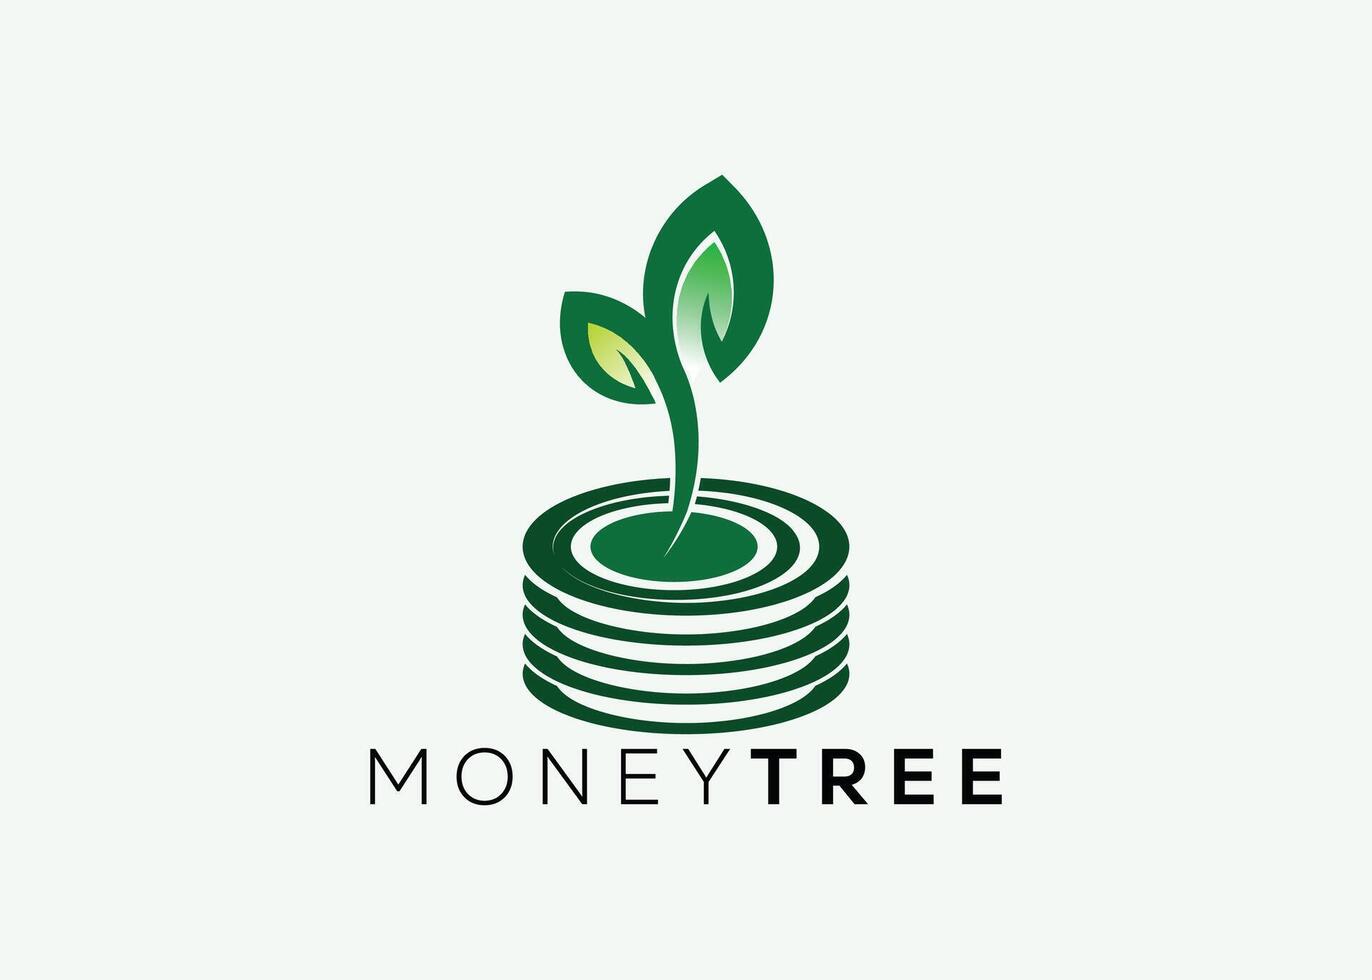 Minimalist Money tree logo design vector template. Money grow investment for business finance logo. Money investment logo